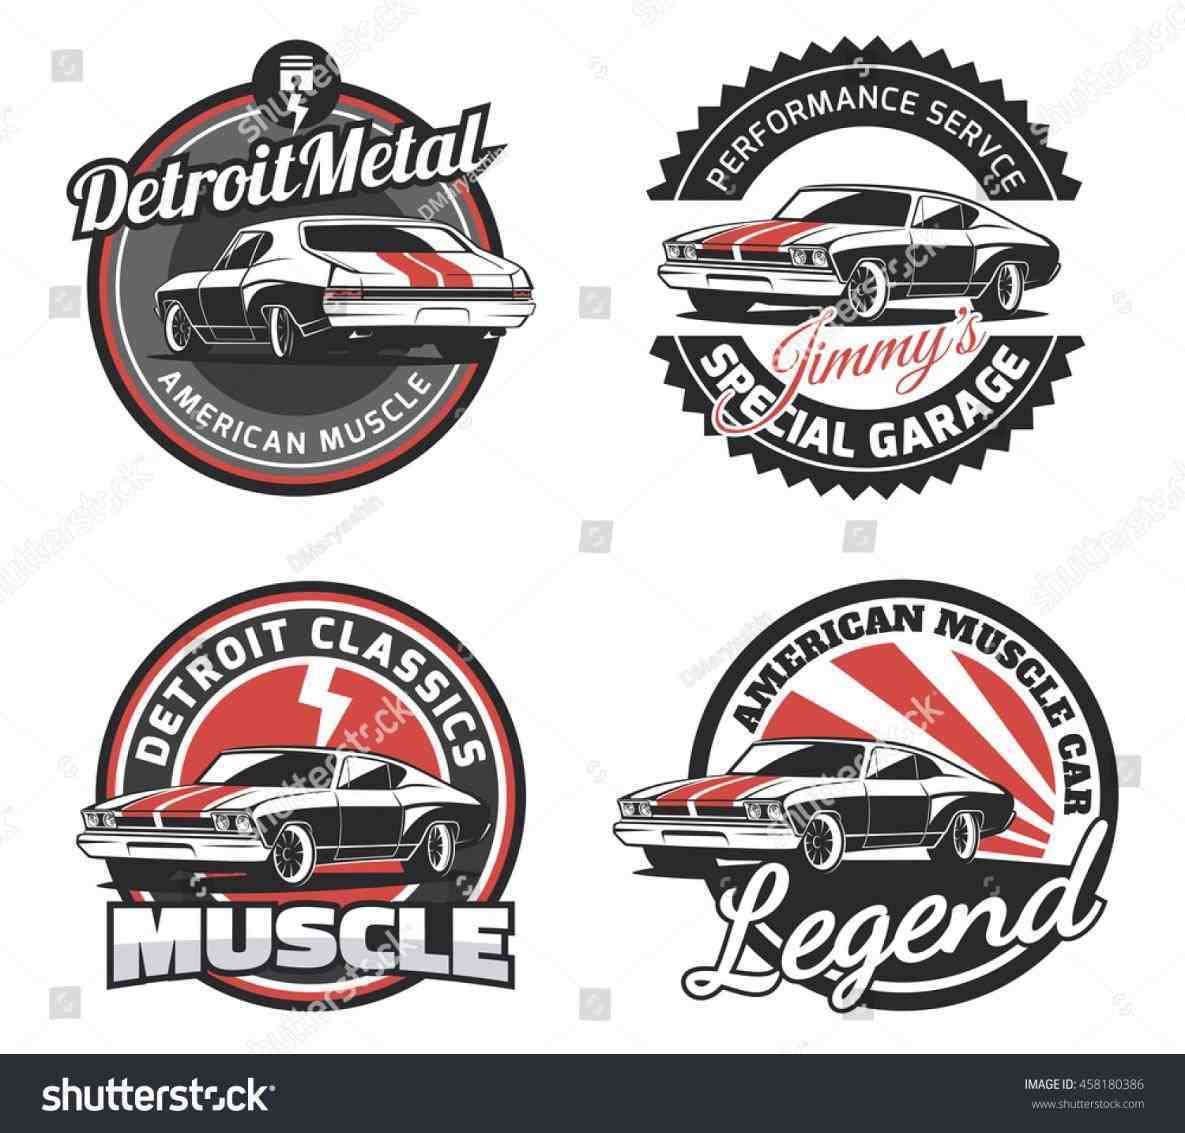 Vintage Automotive Repair Logo - Rhshutterstockcom classic vintage car logo design garage retro